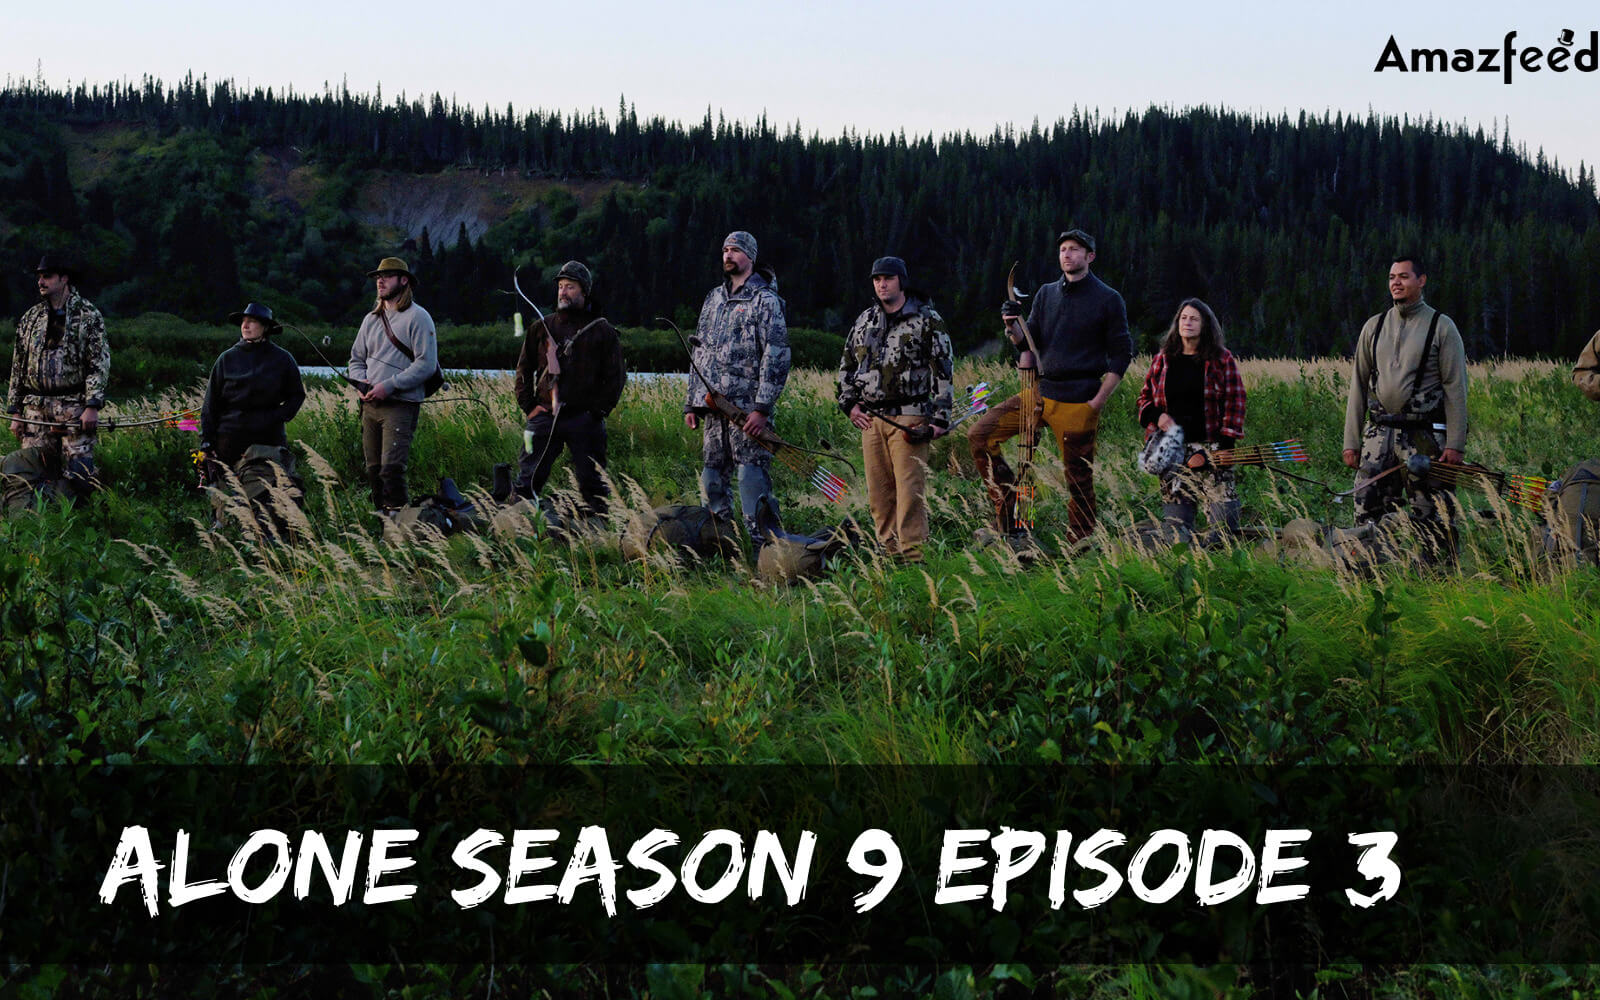 Alone Season 9 Episode 3 release date